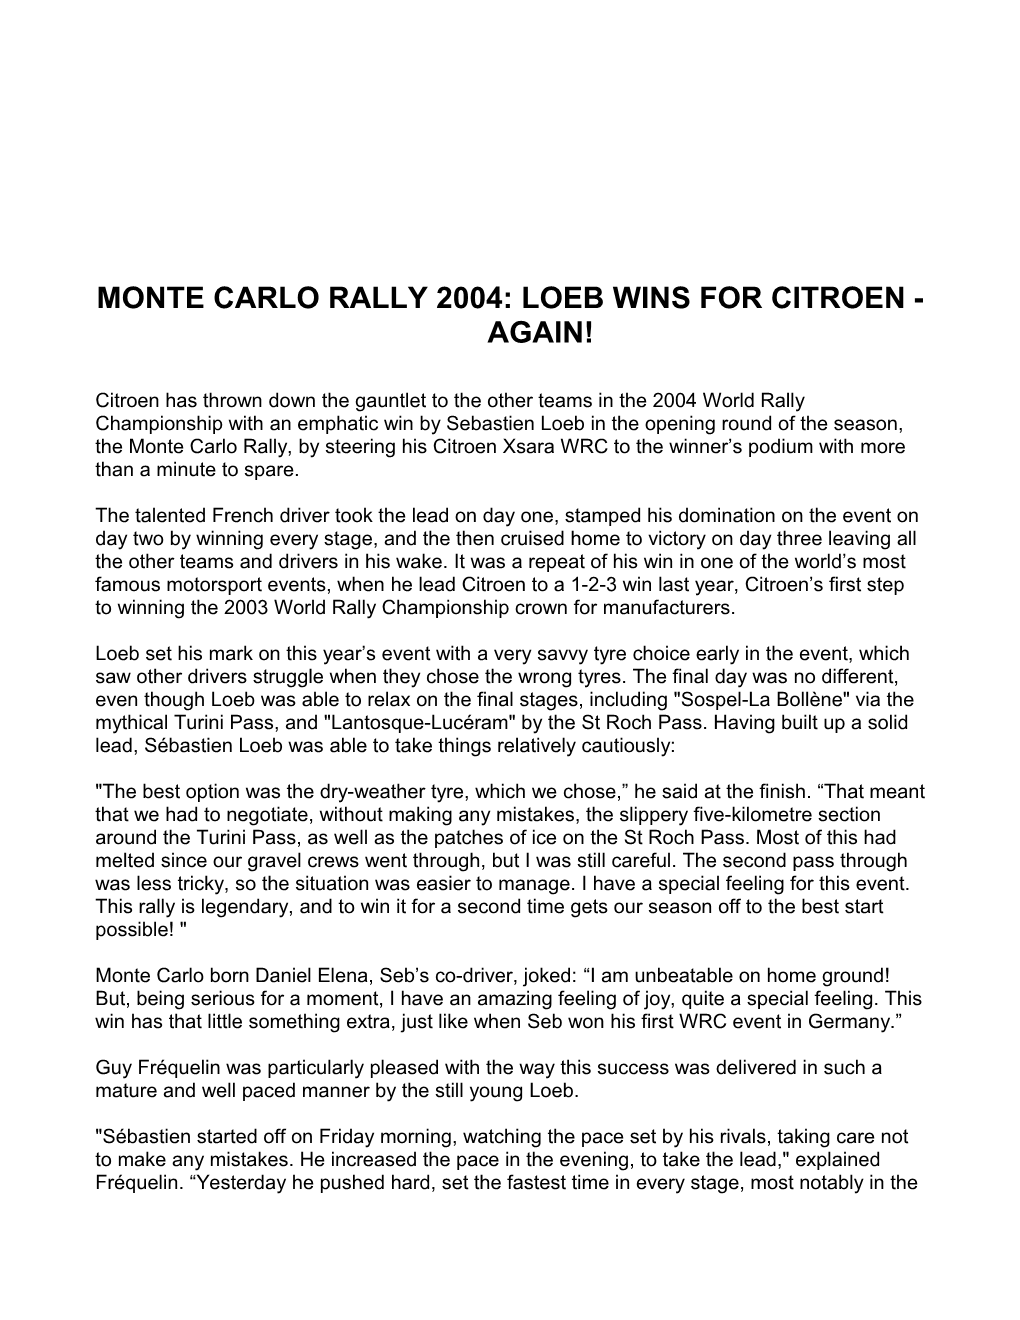 Monte Carlo Rally 2004: Loeb Wins for Citroen - Again!